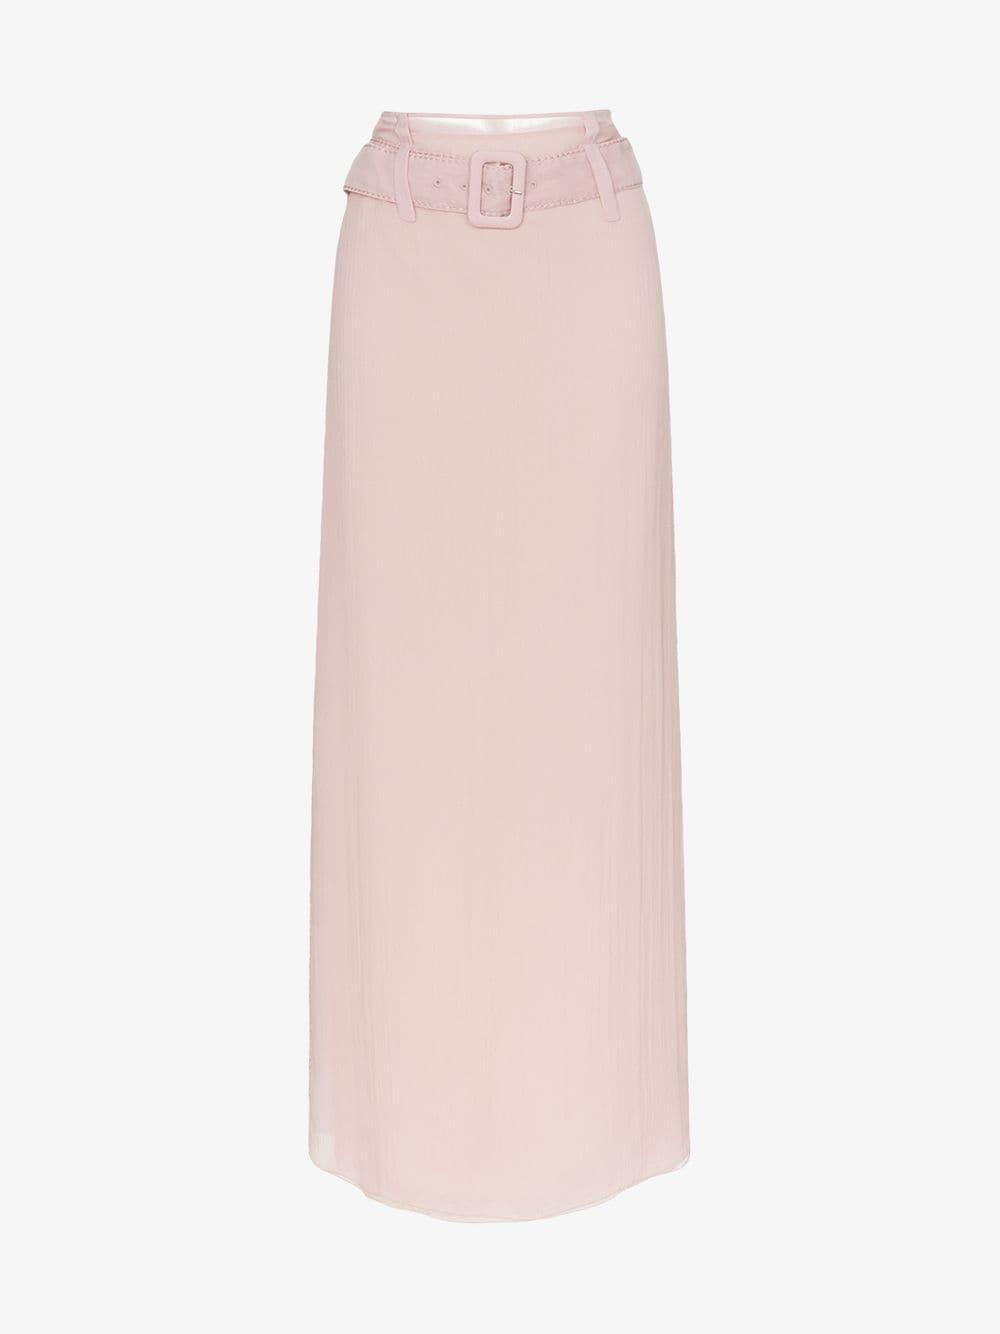 Prada Chiffon Skirt in Pink | Lyst